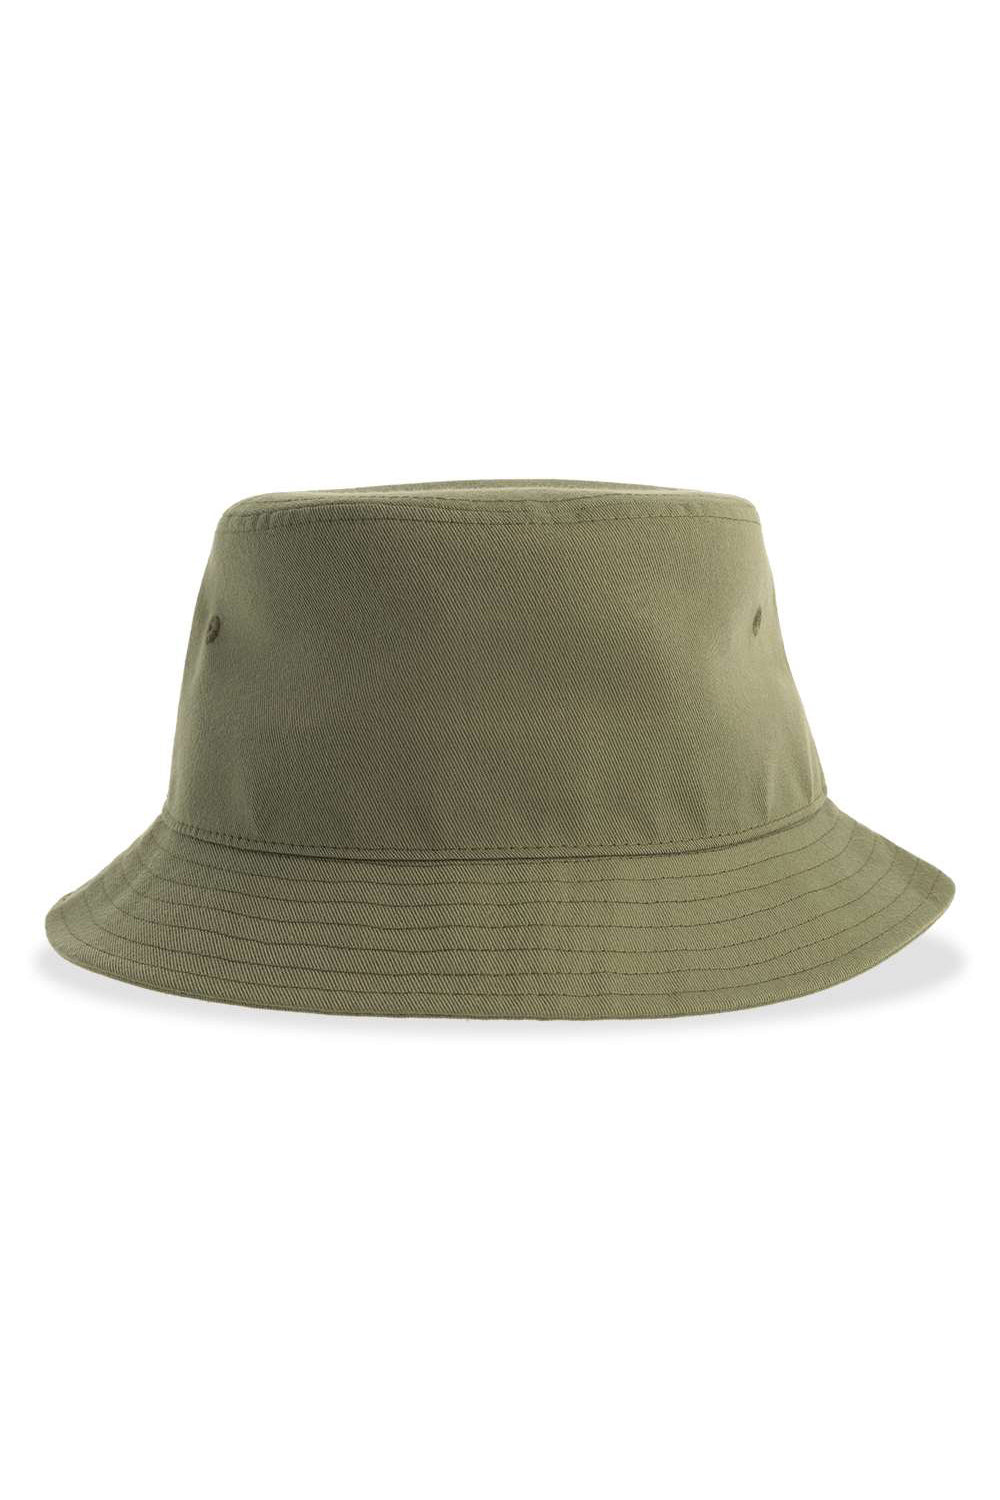 Atlantis Headwear GEO Mens Sustainable Bucket Hat Olive Green Flat Back